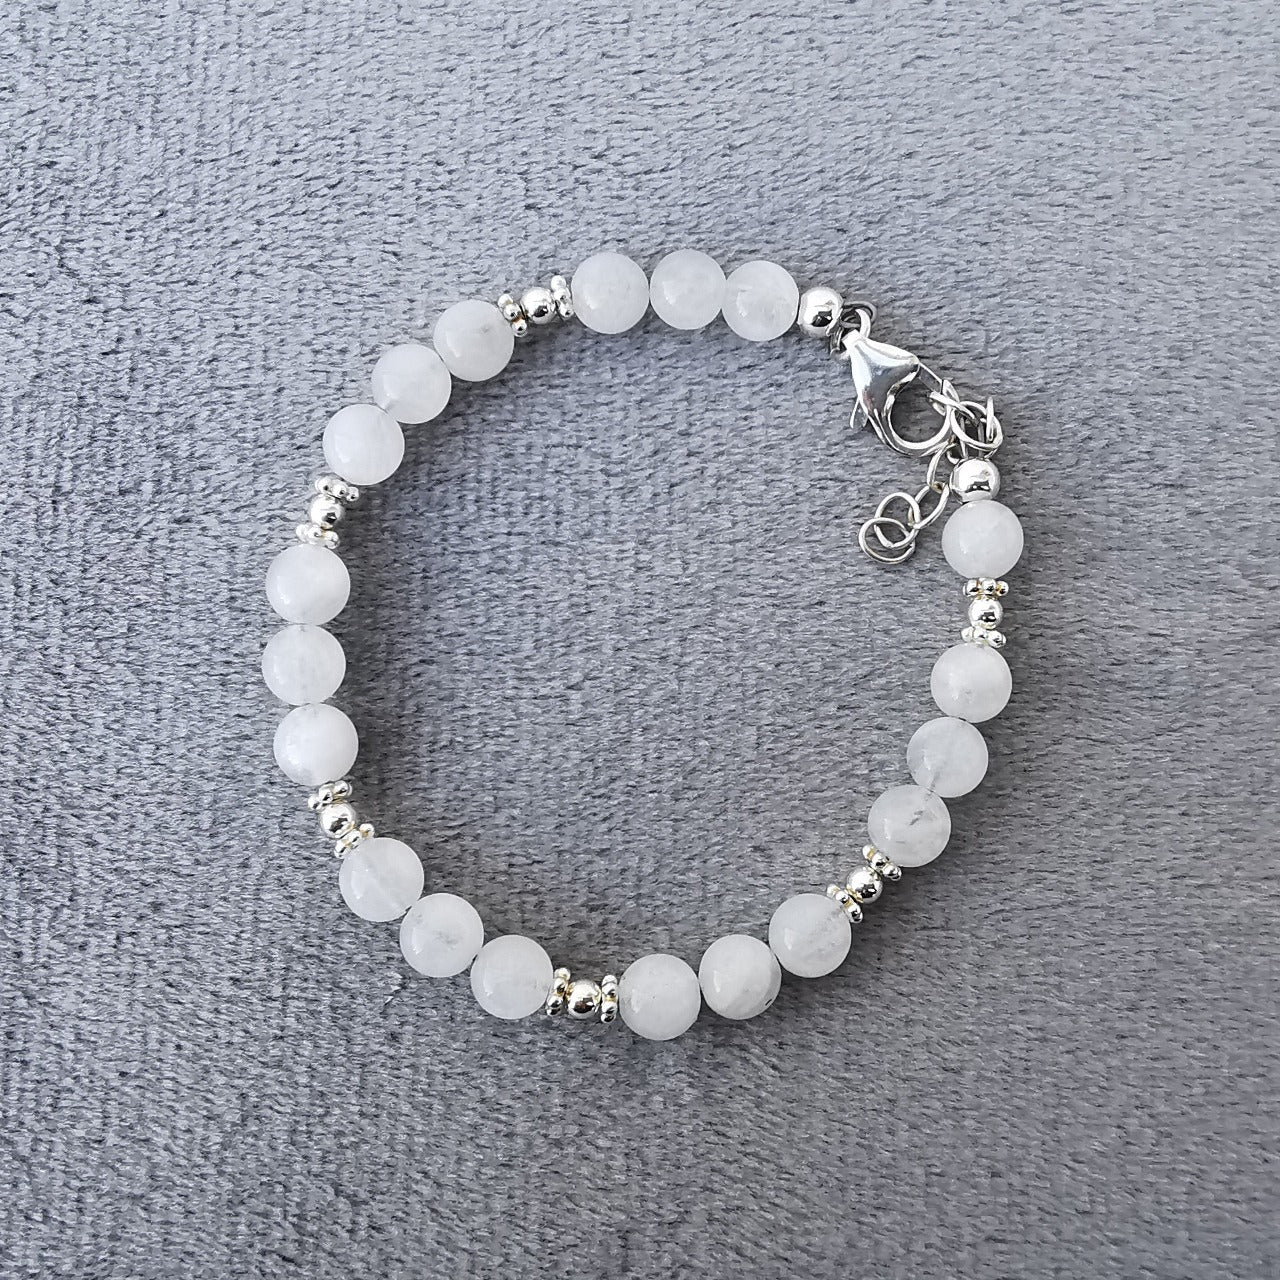 Månestein krystall steinarmbånd - Moonstone Crystal Gemstone Bracelet